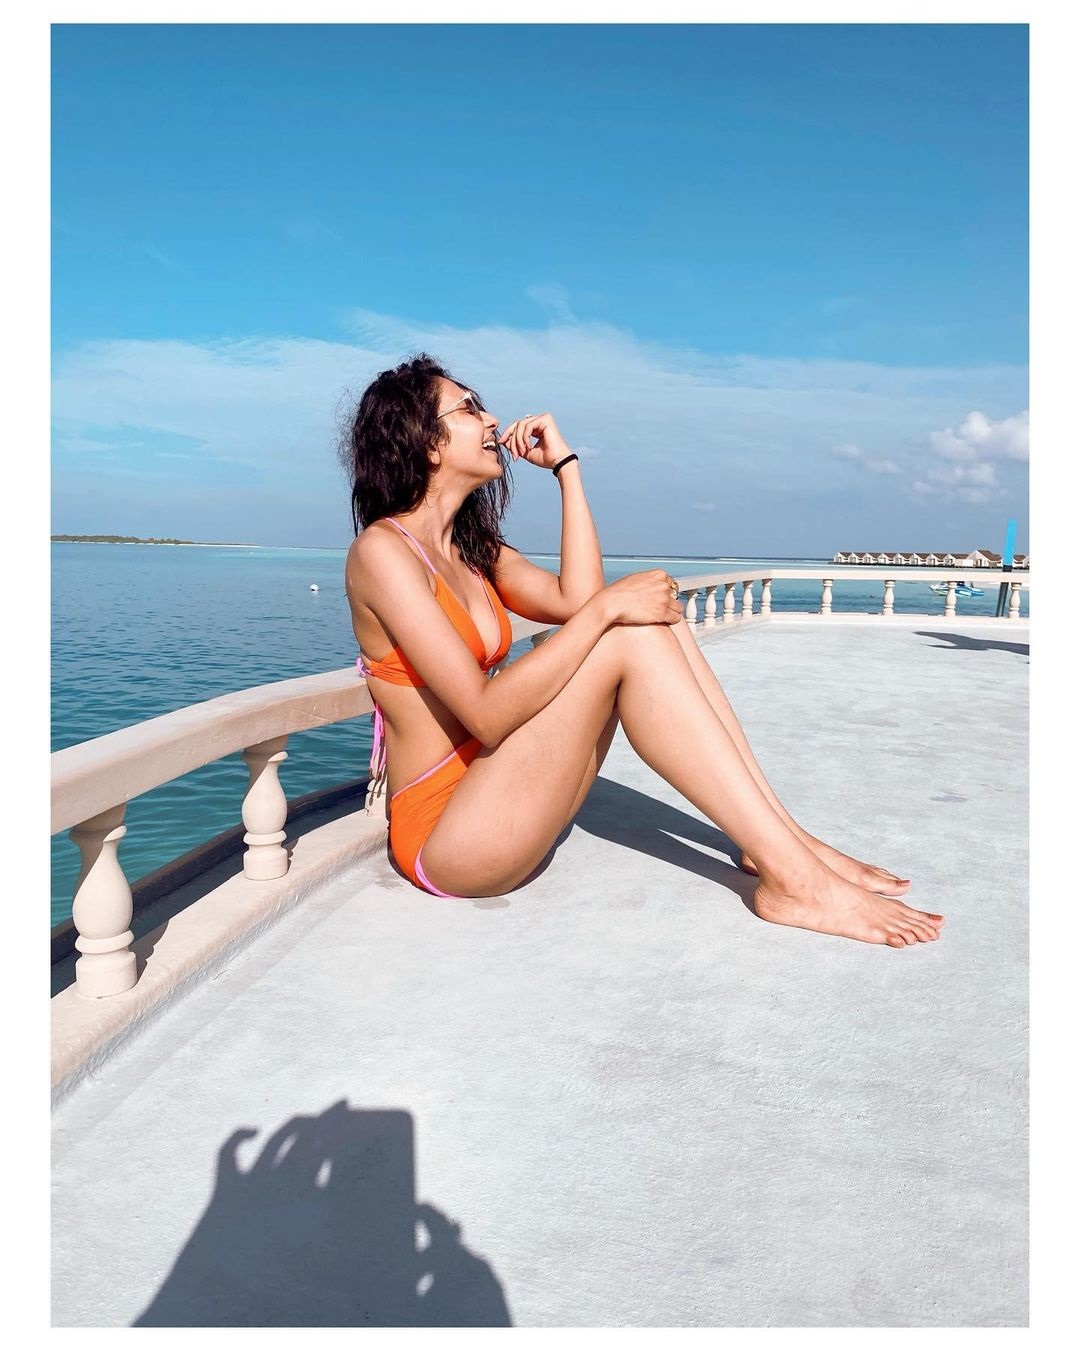  Rakul Preet Singh bikini moment captured by her daddy